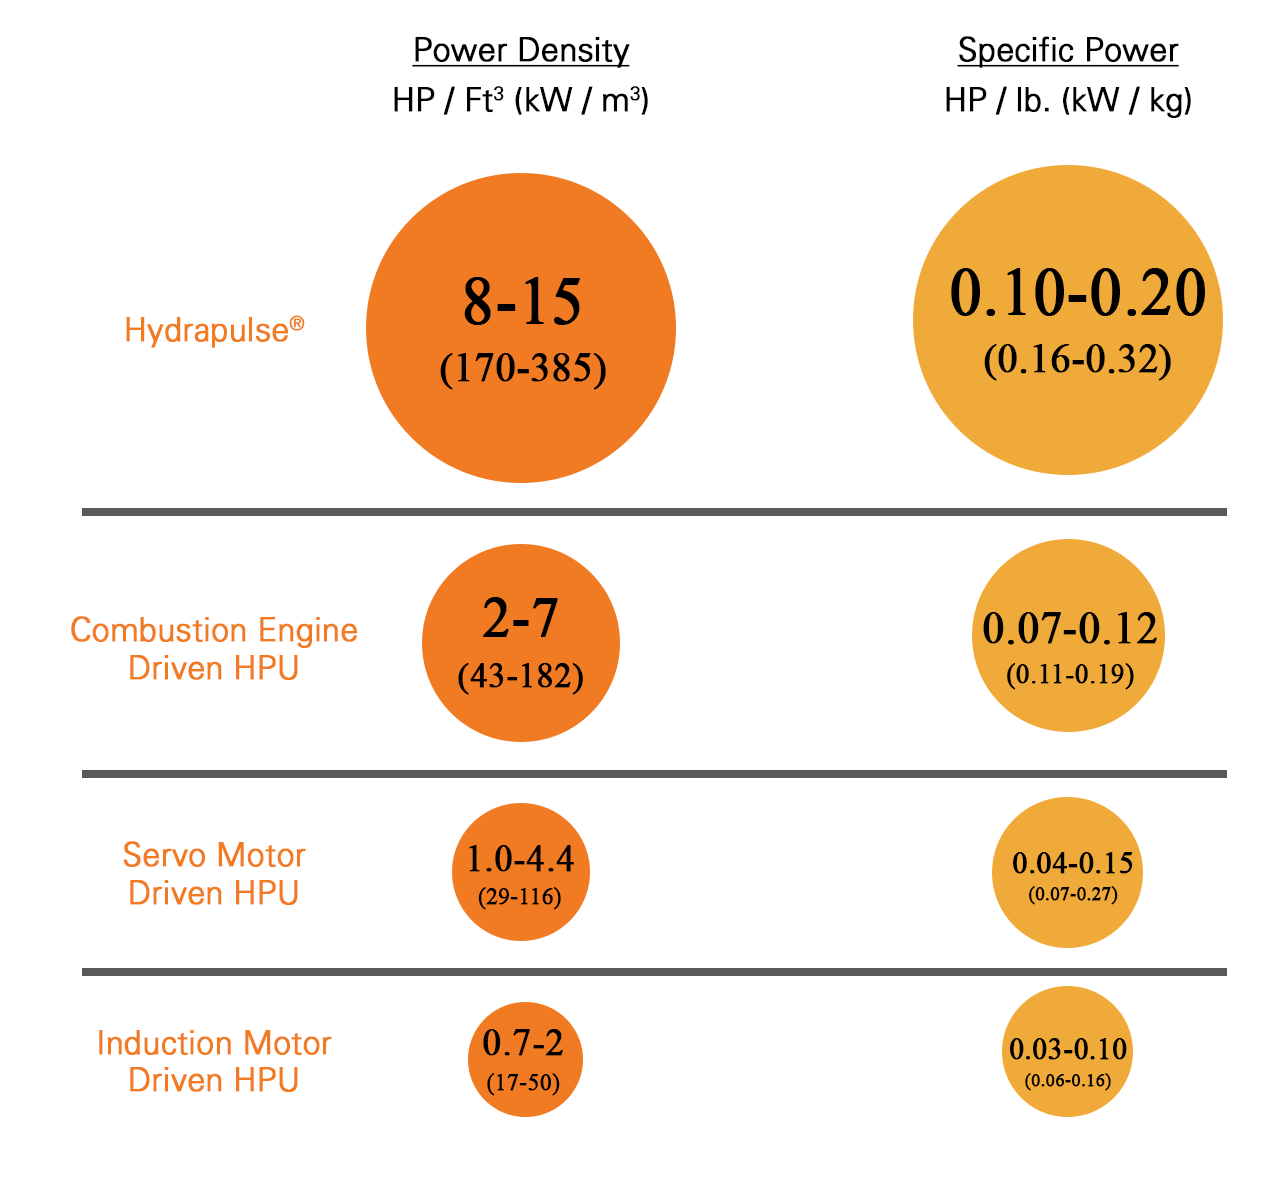 Power density comparison of HPU technologies